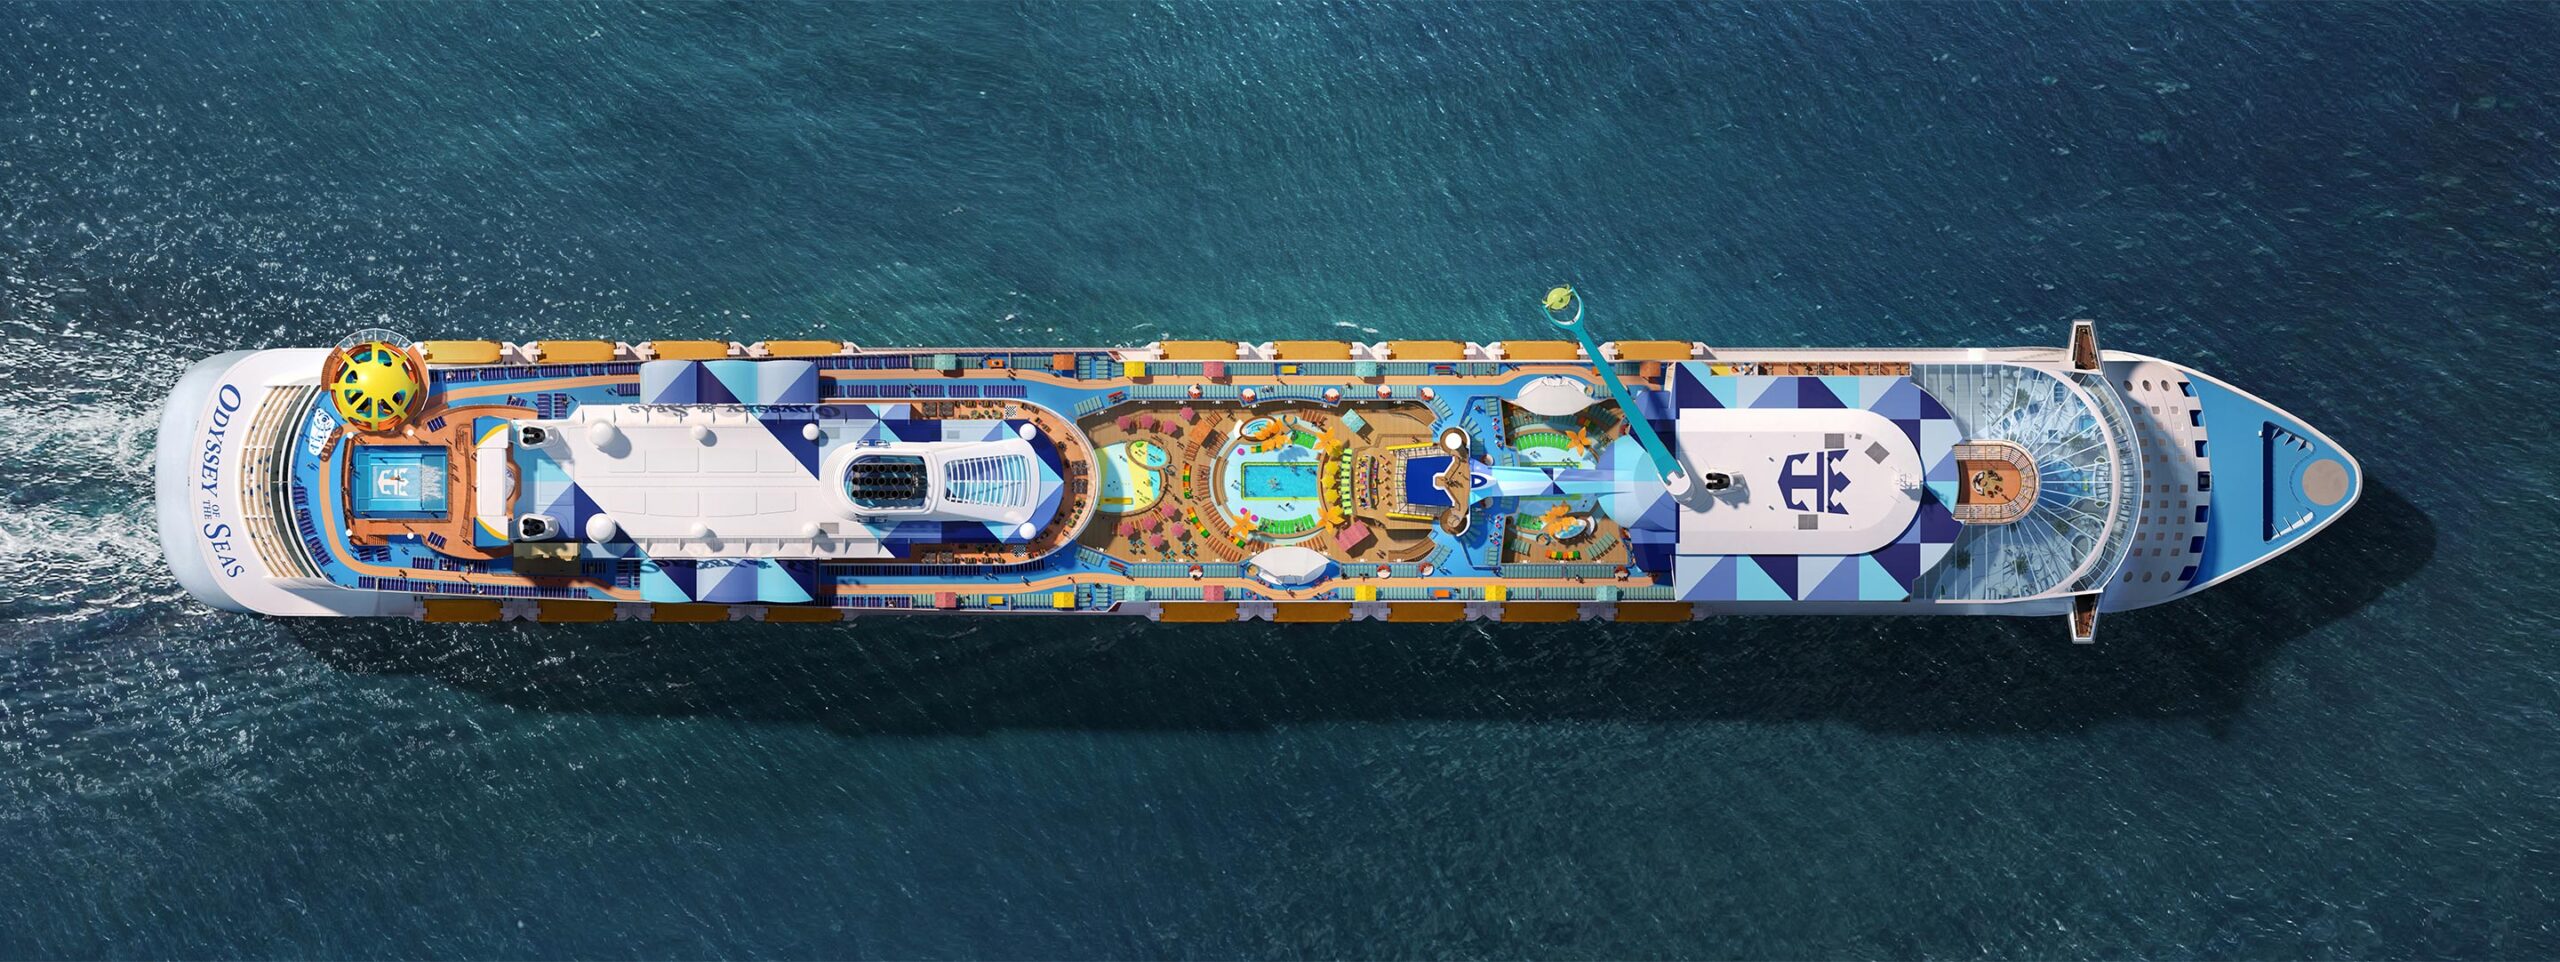 odyssey cruises royal caribbean